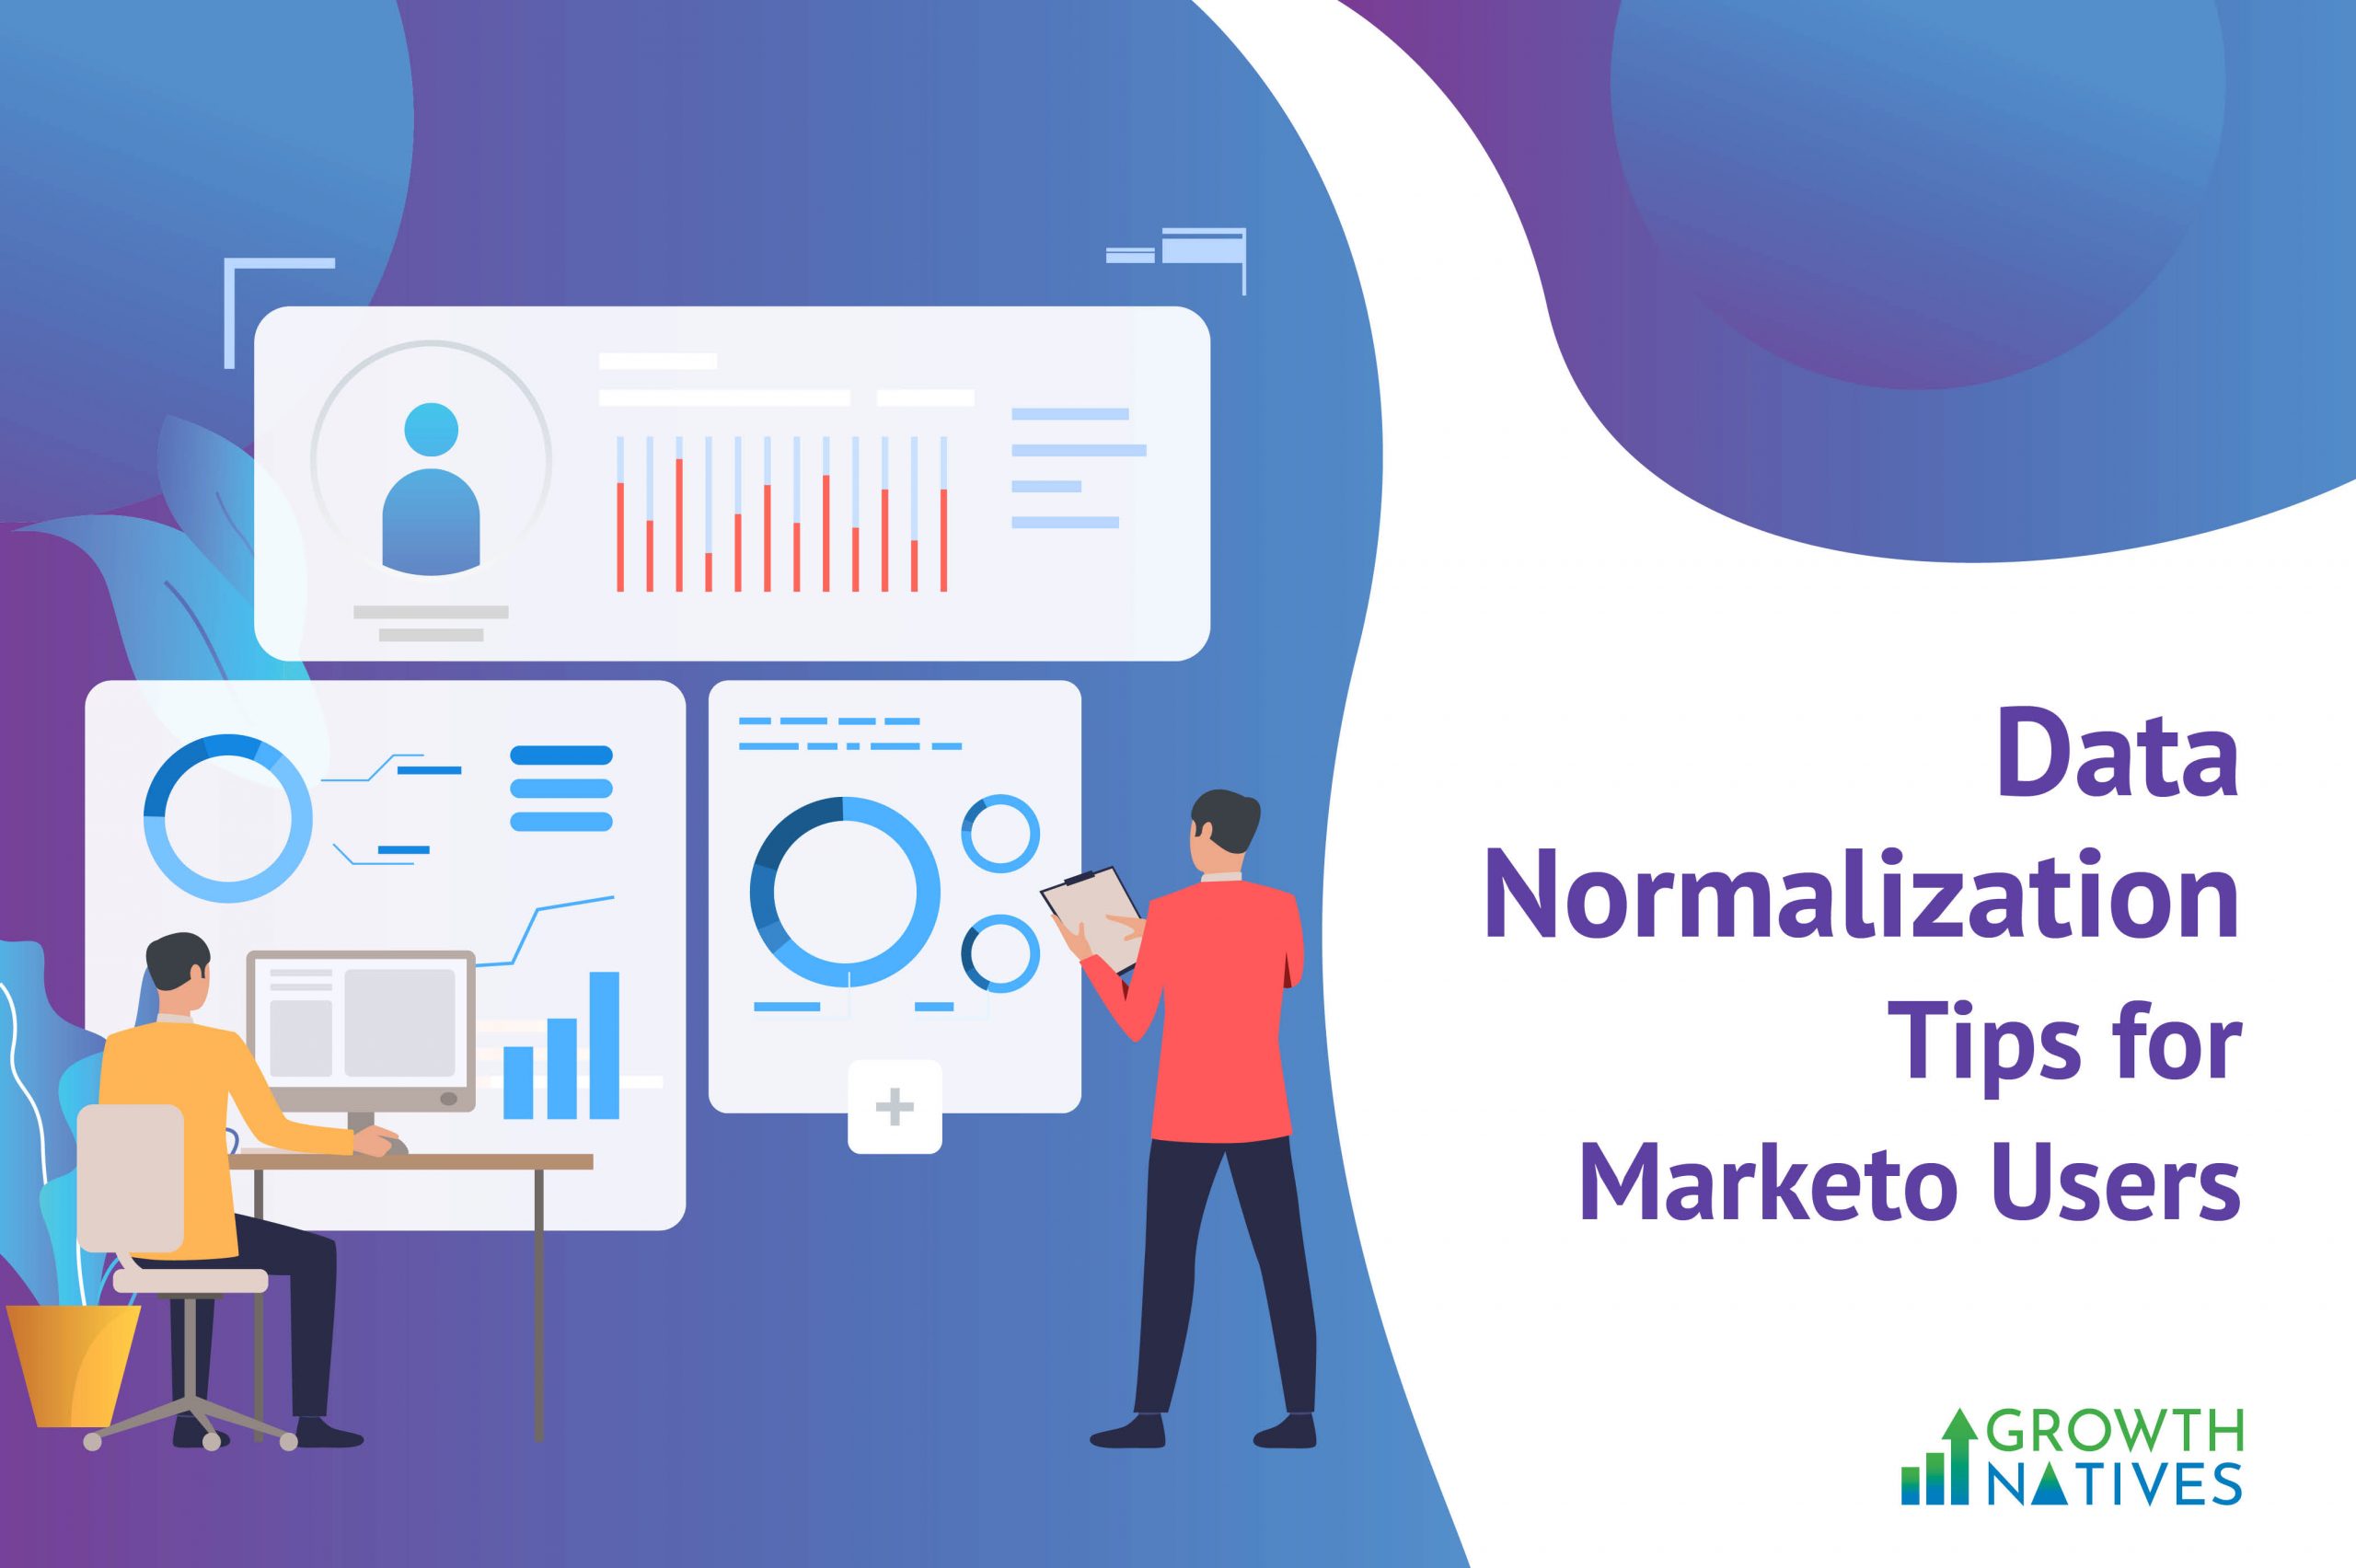 Data Normalization in Marketing